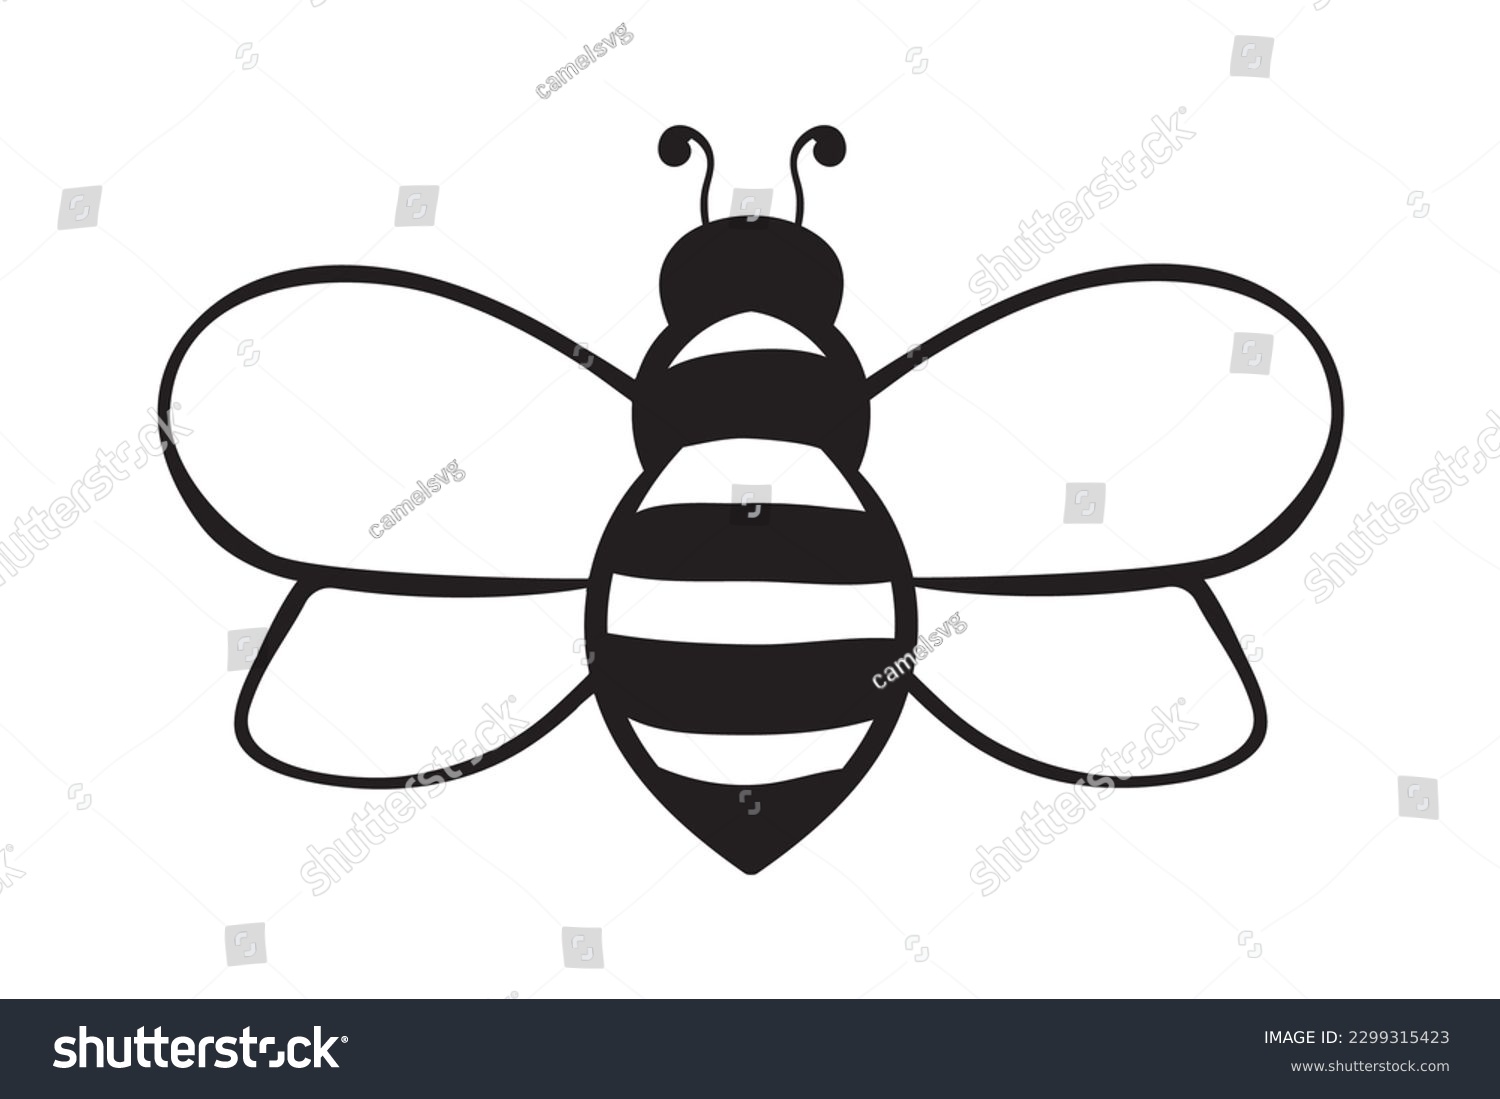 SVG of Bee, Honeybee, Handwritten Bee, Bumble Bee Svg, Honey bee, insect, animal, flying, fly, cute, wings, wing, bumblebee, bumble, honeybee, bug, black svg